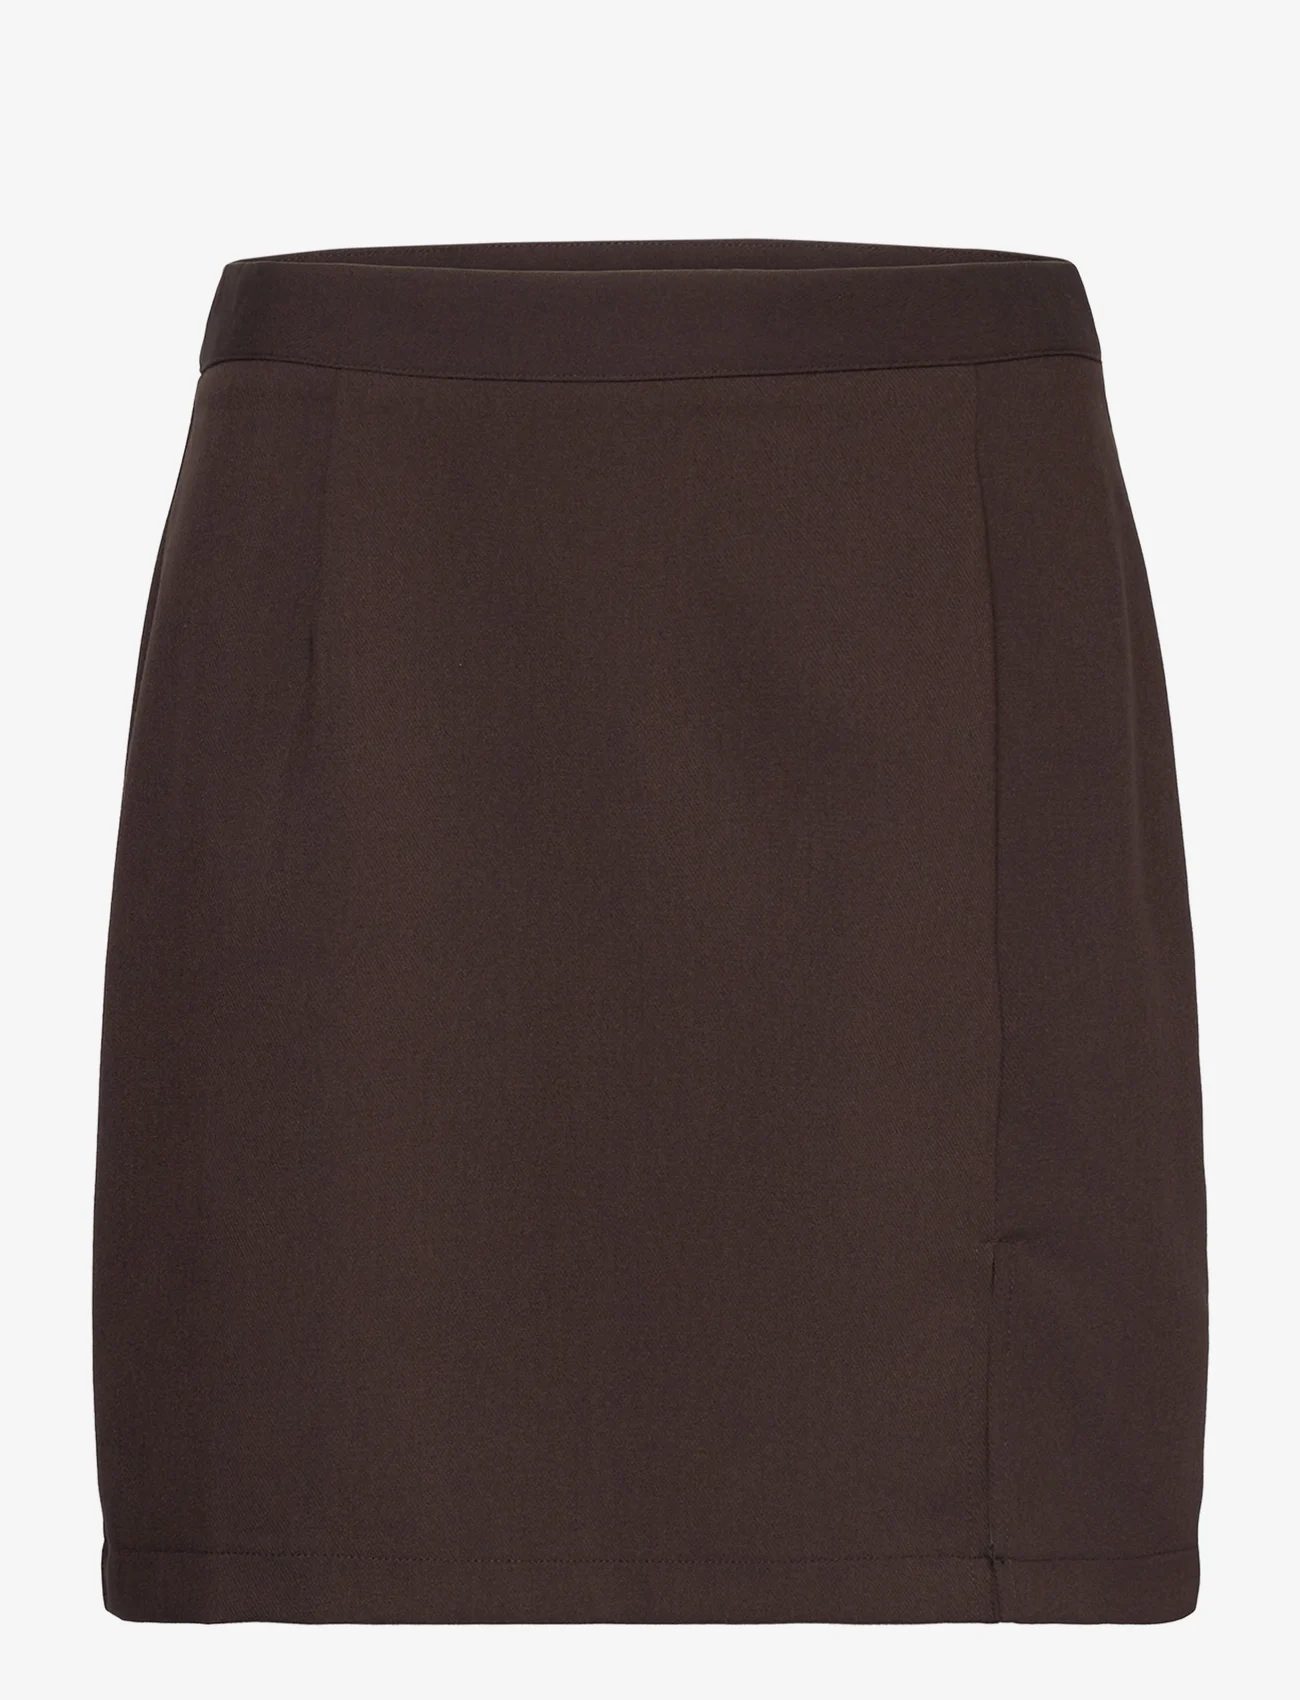 A-View - Annali skirt-1 - korte skjørt - brown - 0